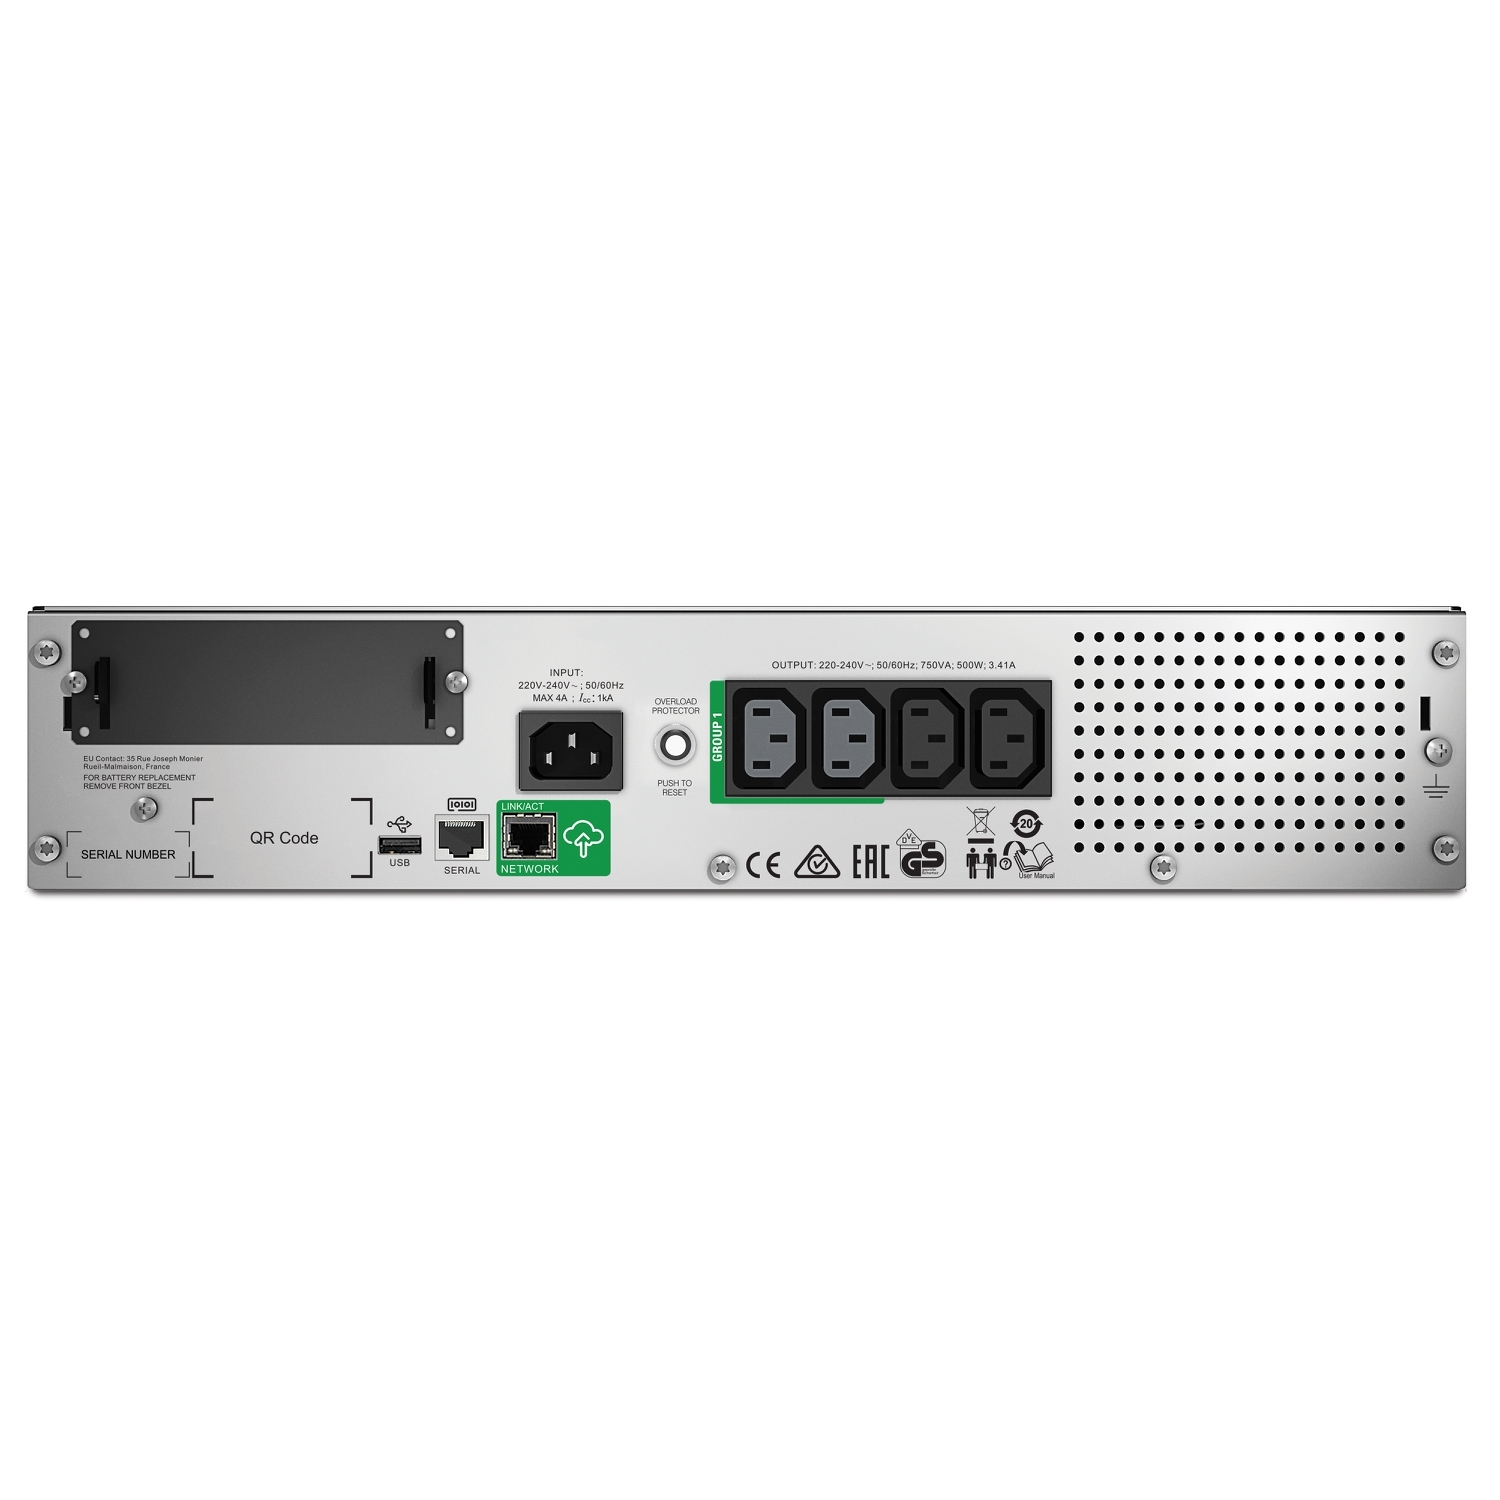 APC SMT750RMI2UC uninterruptible power supply (UPS) Line-Interactive 750 VA 500 W 4 AC outlet(s)